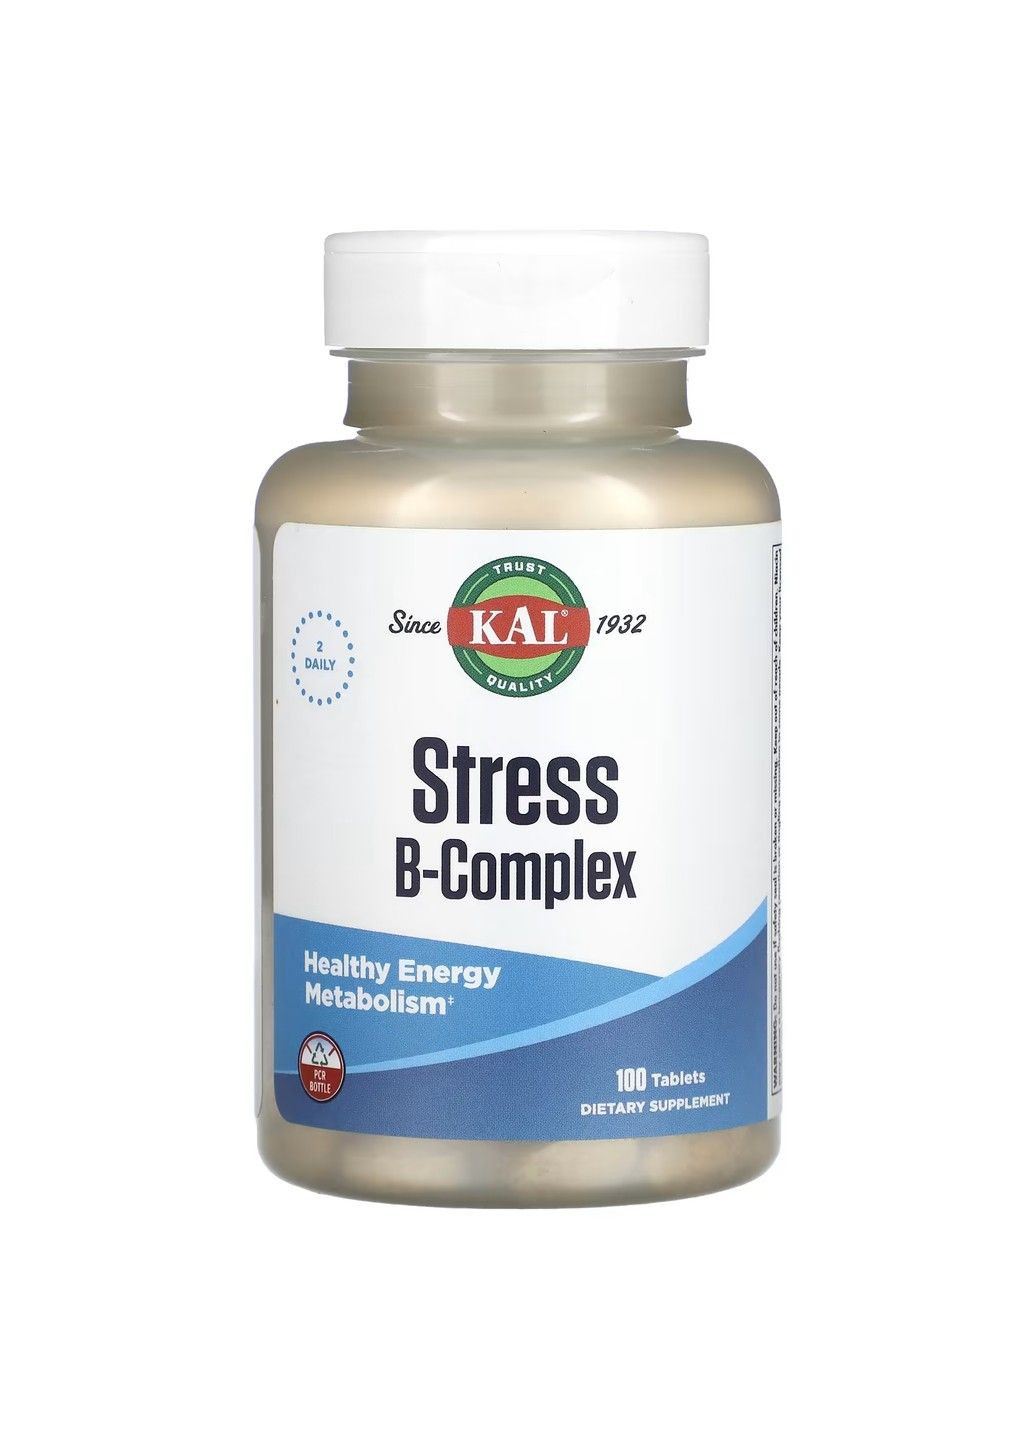 Комплекс витаминов группы B против стресса Stress B Complex - 100 таб KAL (292395876)